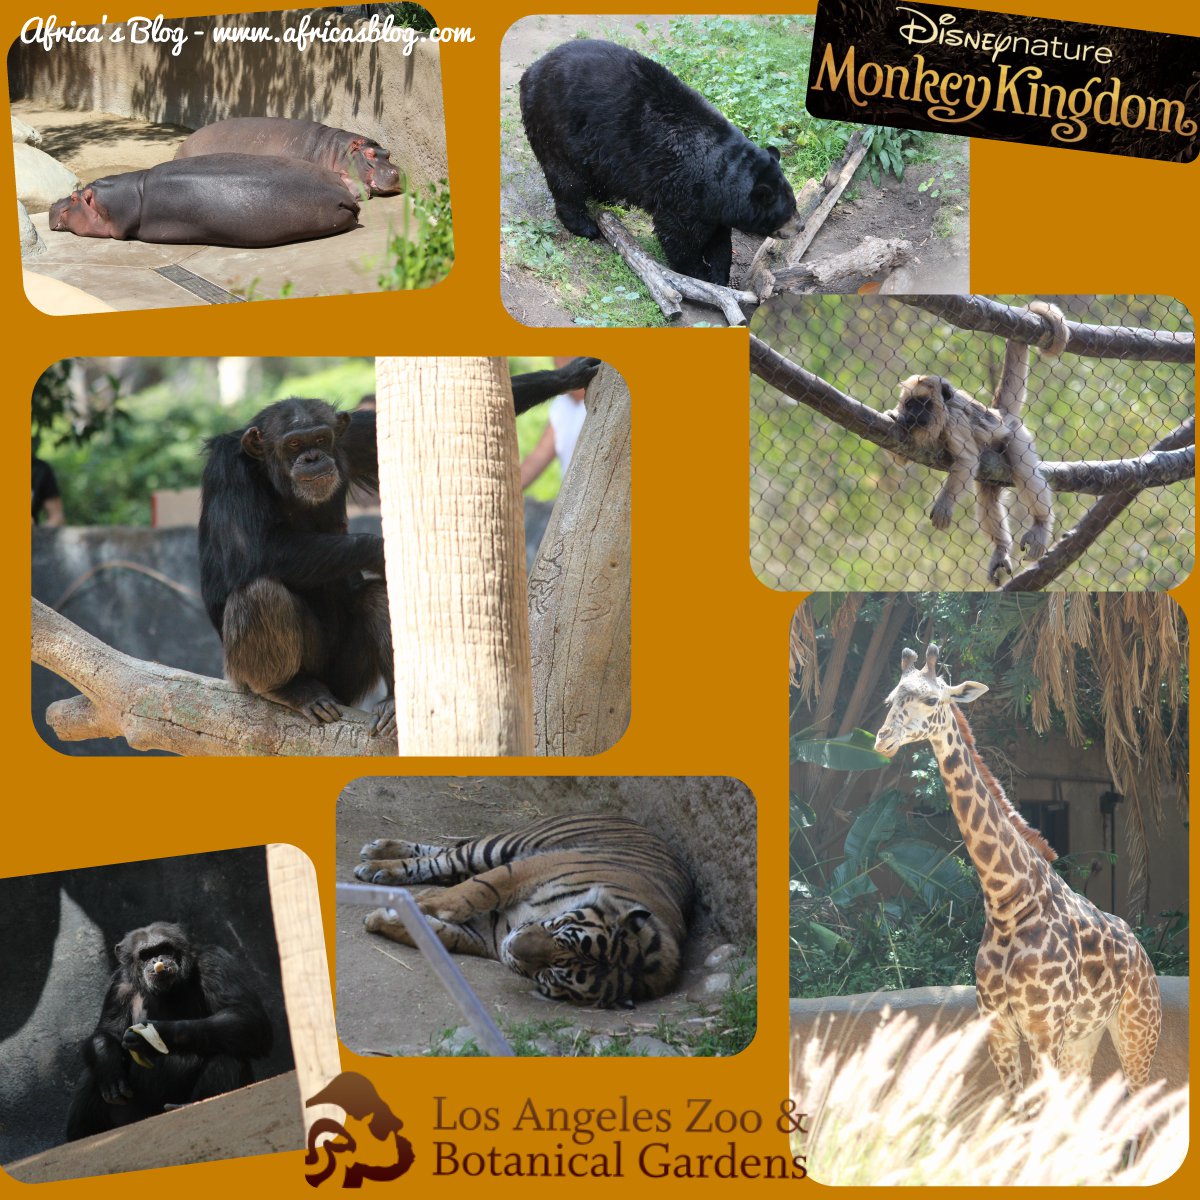 LA Zoo Visit - Monkey Kingdom